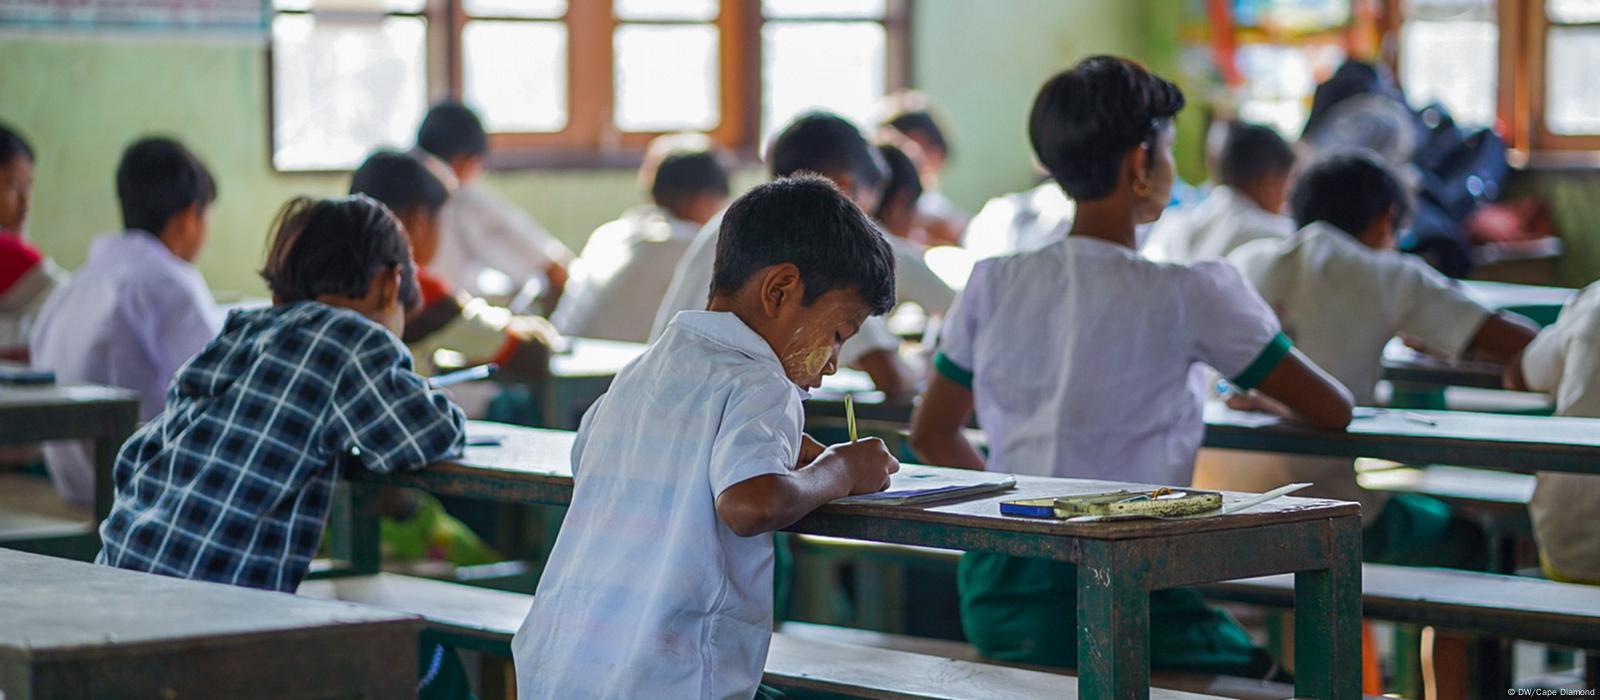 Asian Schoolgirl Public Sex - Sex education in schools sparks debate over morality â€“ DW â€“ 07/27/2020